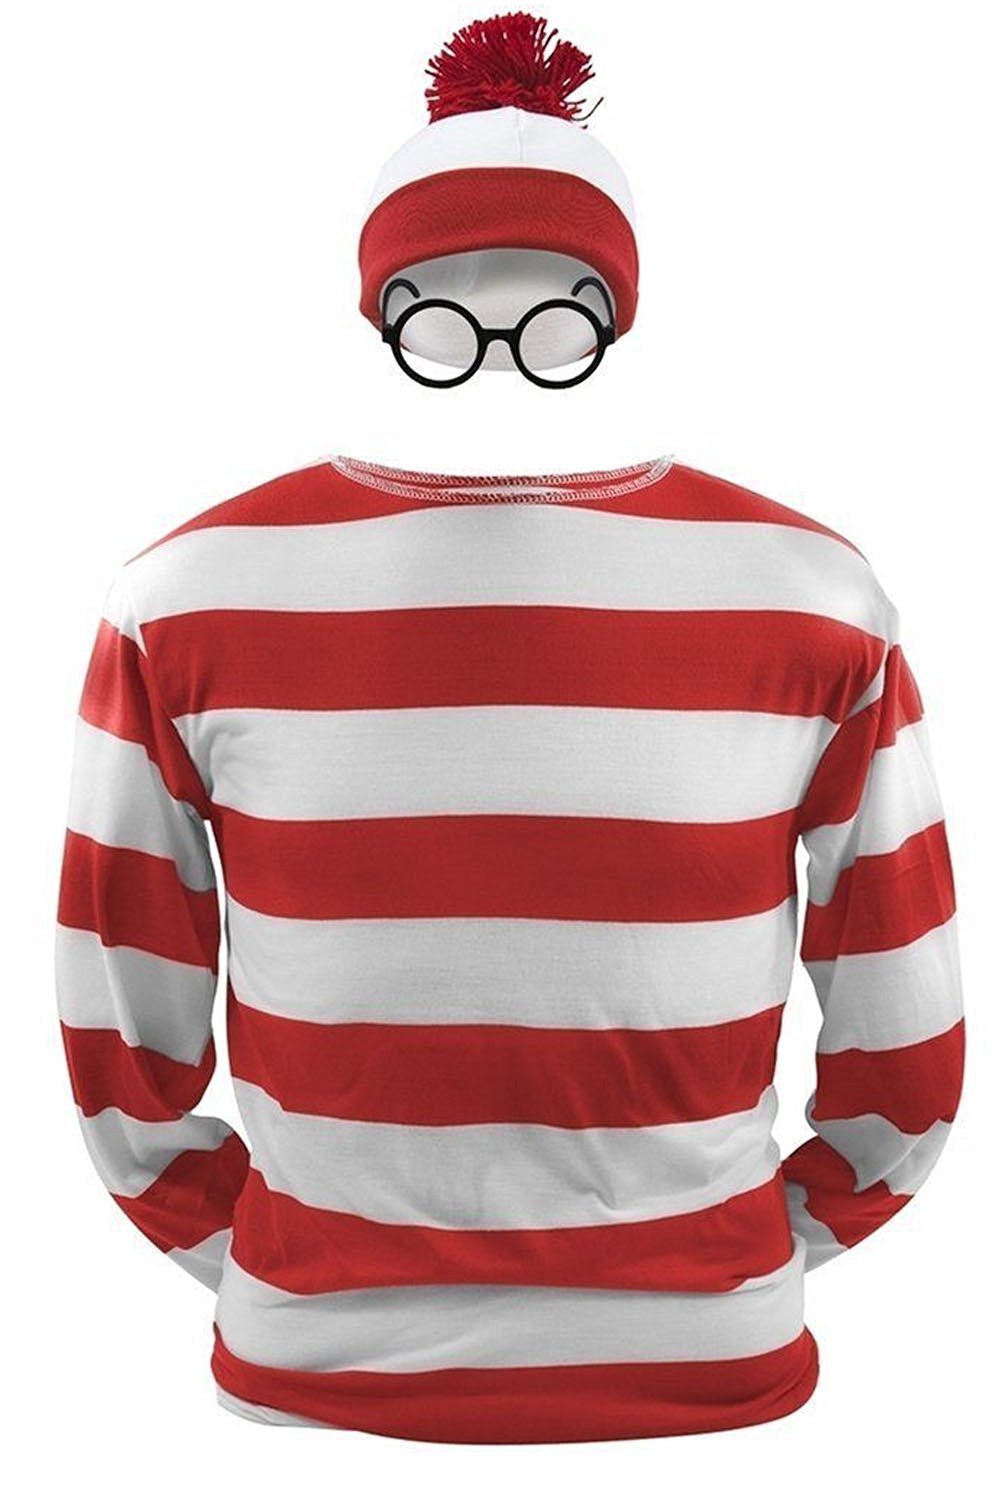 Where's Waldo Waldo  Waldo & Friends T-shirt Cosplay Costume